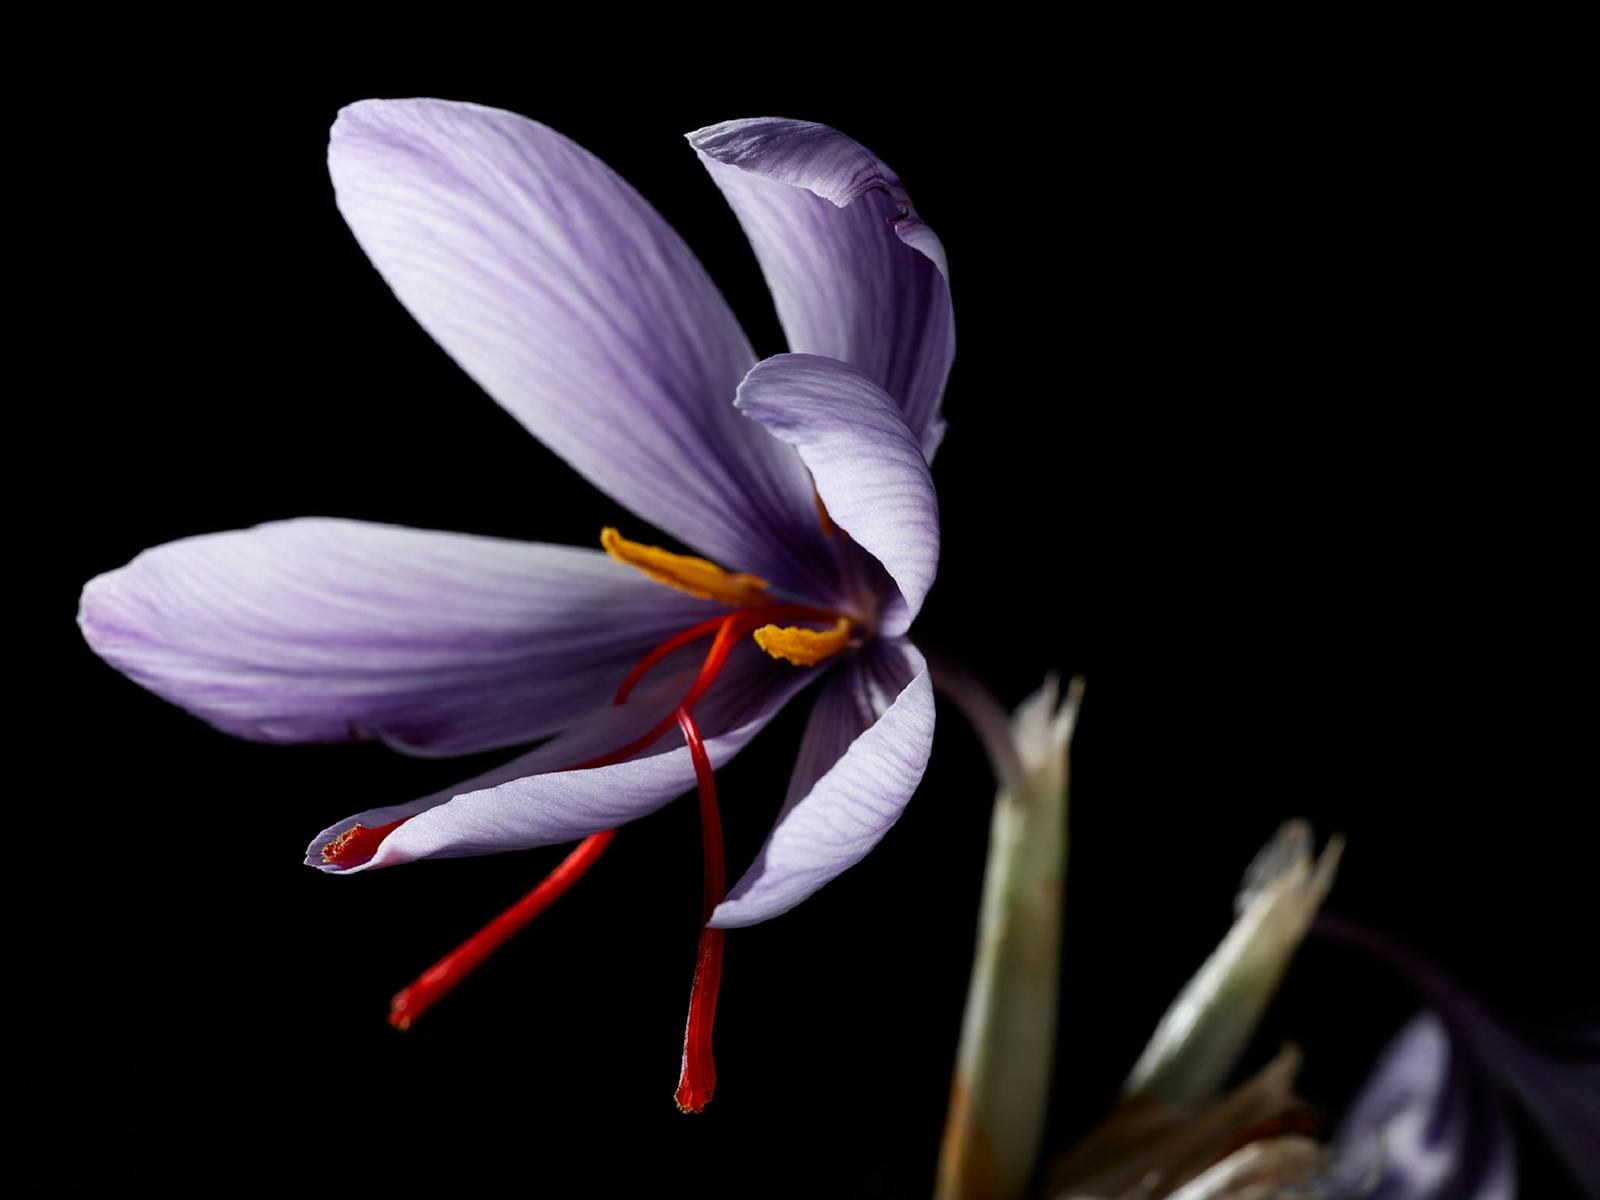 Red saffron threads protruding from lilac saffron flower